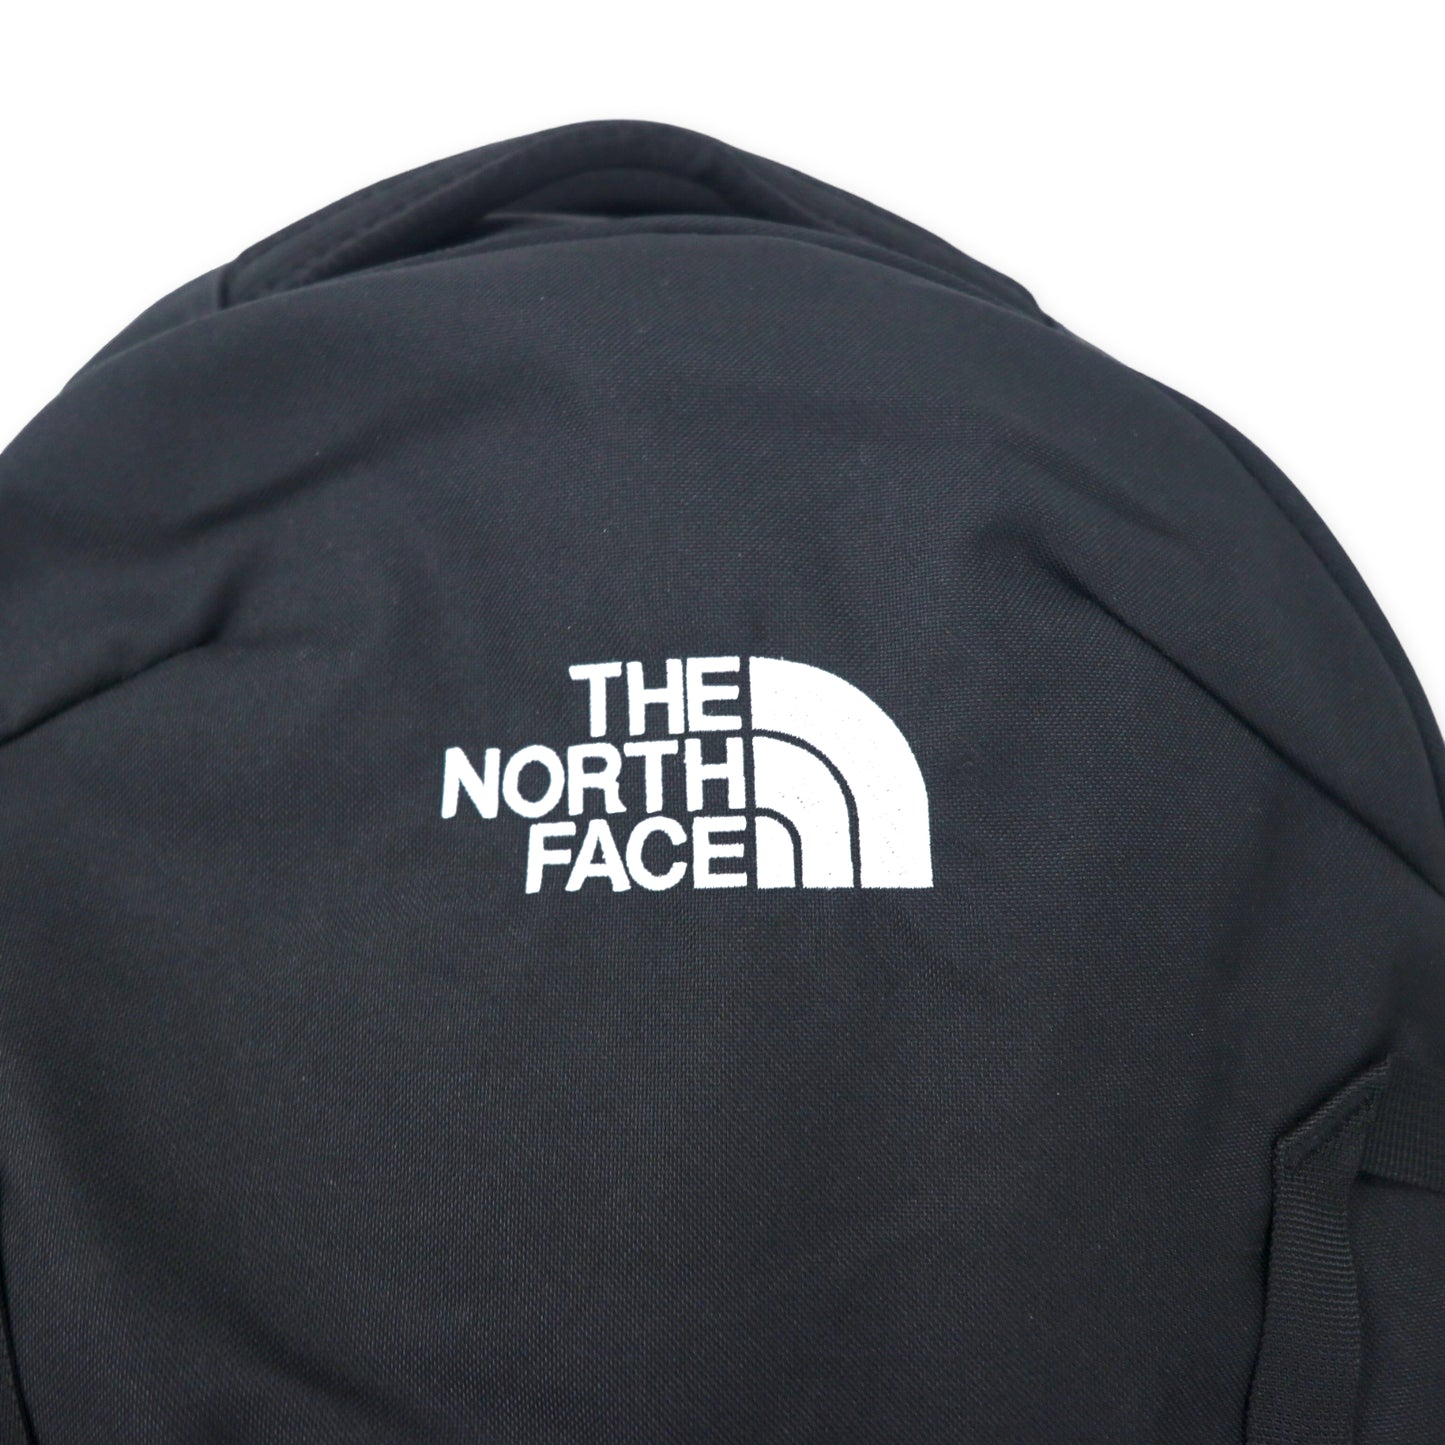 THE NORTH FACE ボルト VAULT バックパック リュックサック 26L ブラック ポリエステル ロゴ刺繍 NF0A3VY2